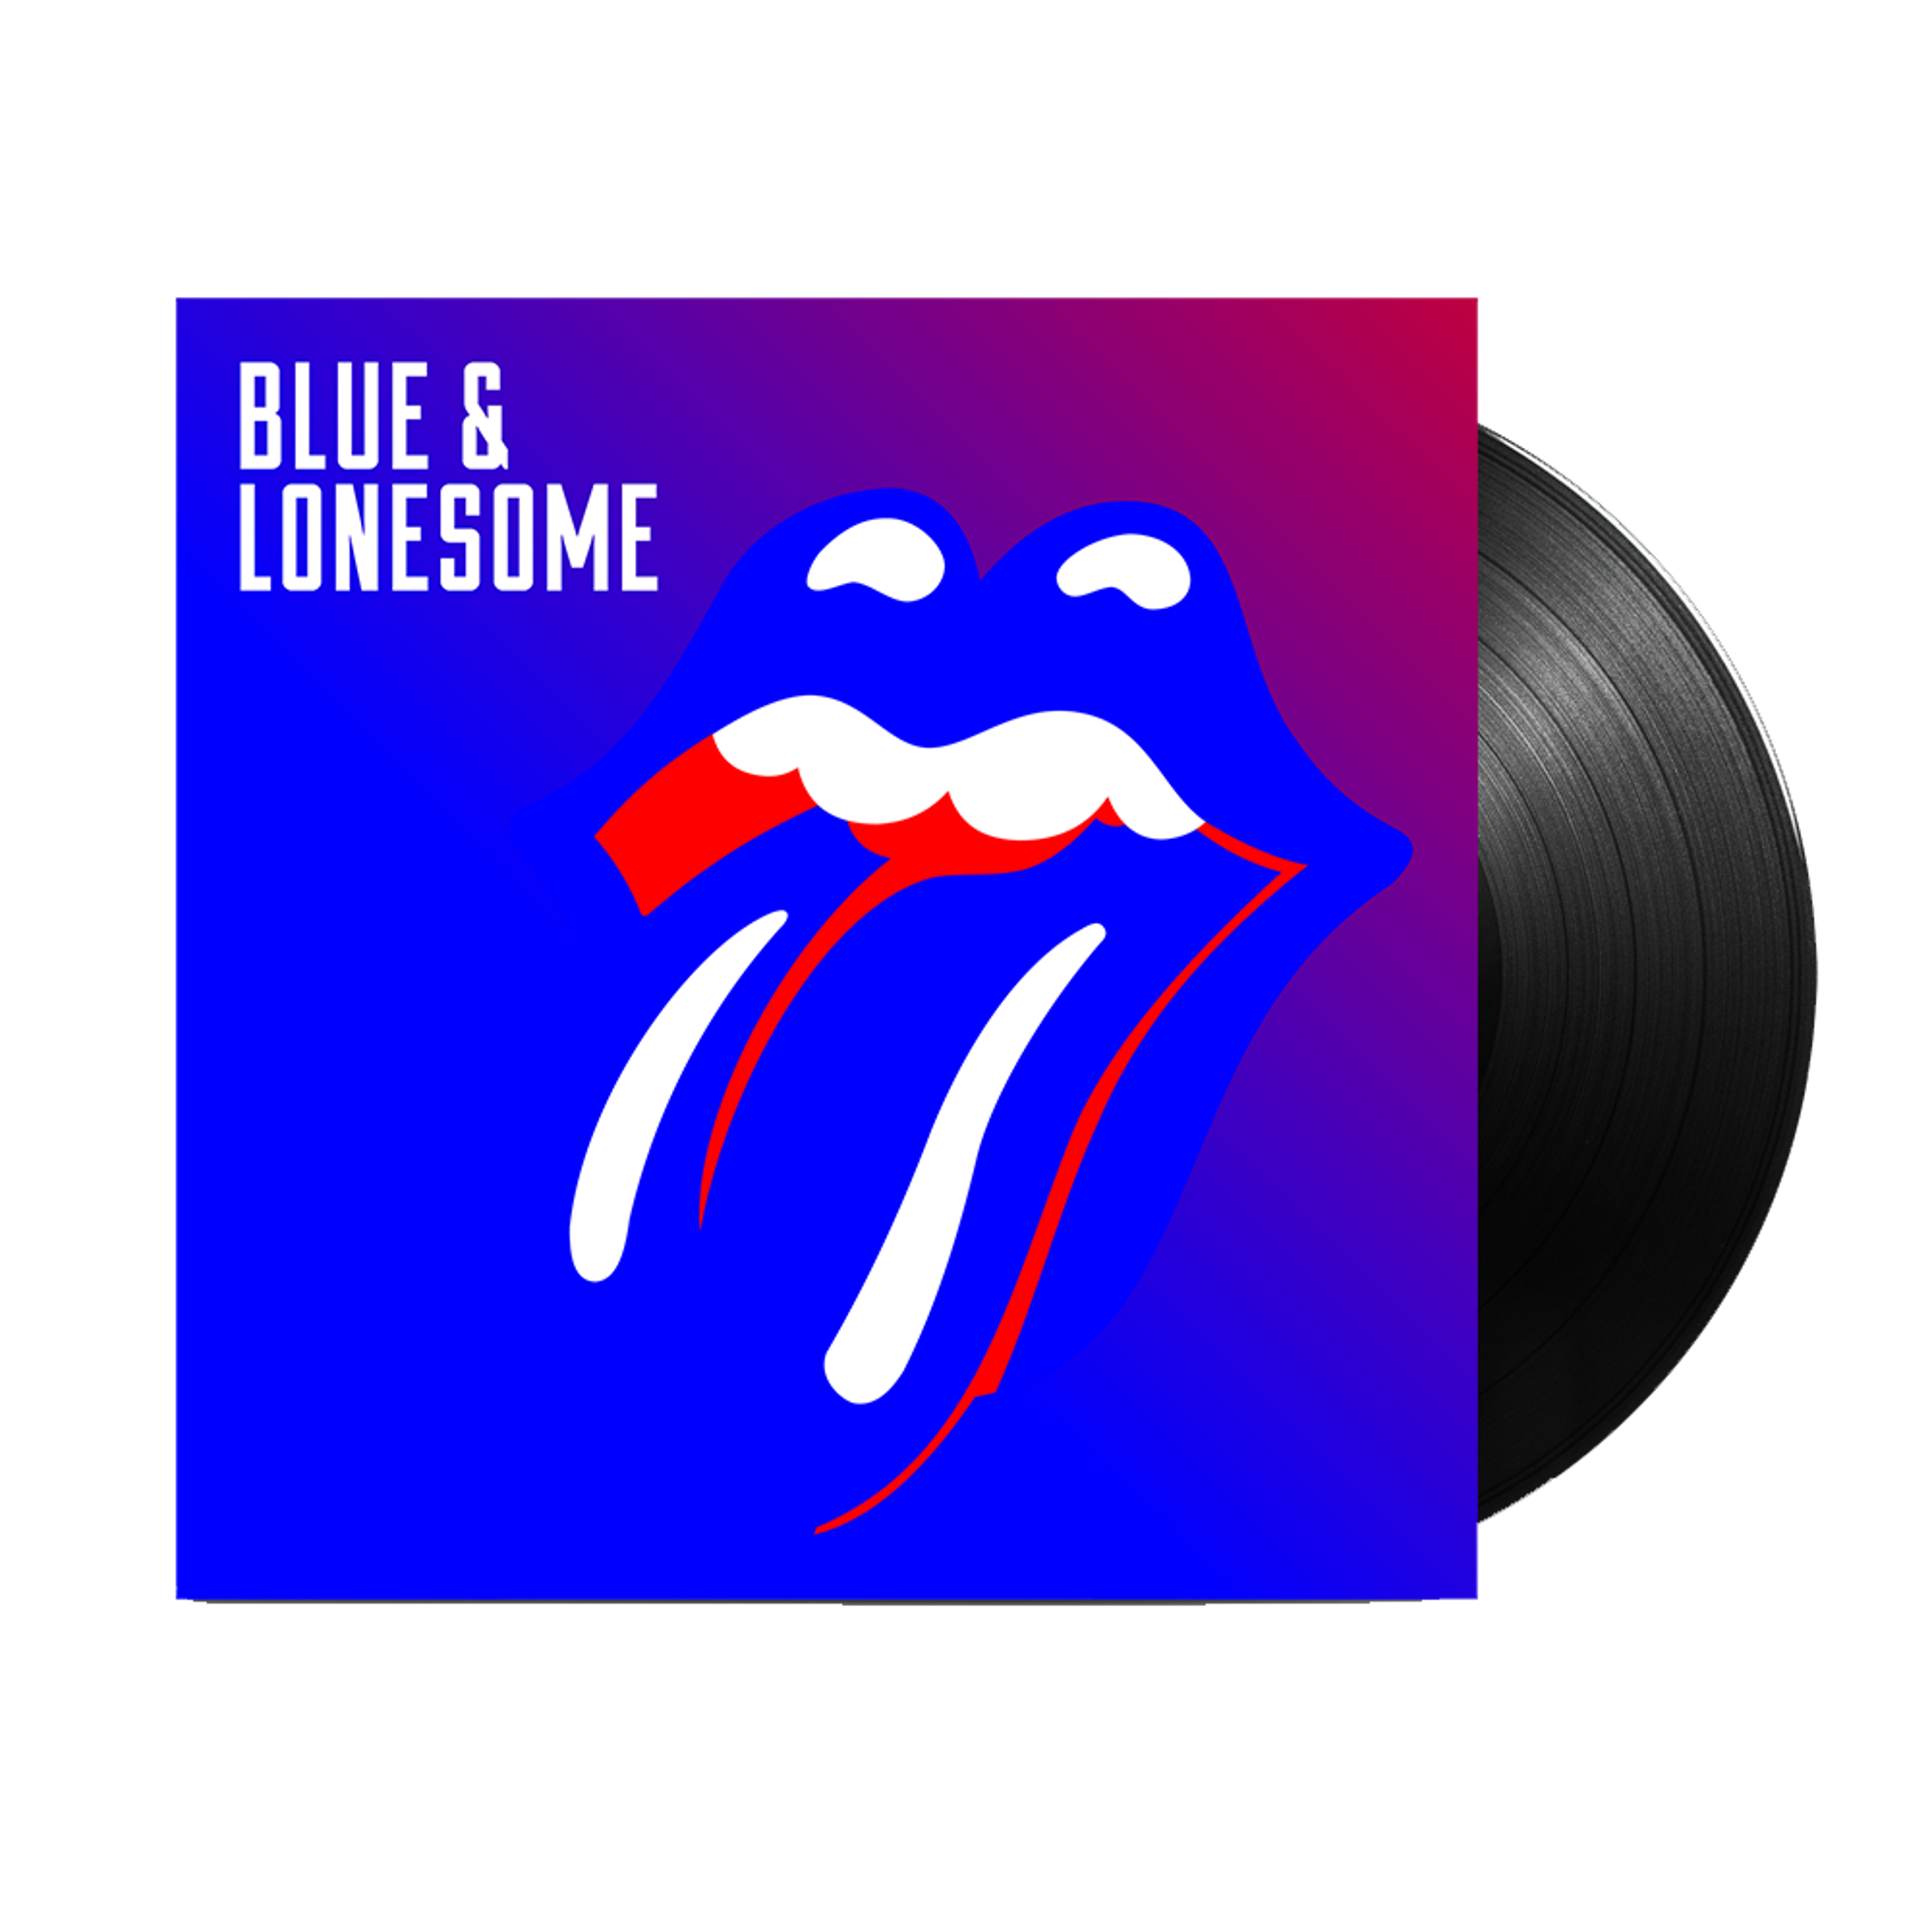 Blue & Lonesome Vinyl